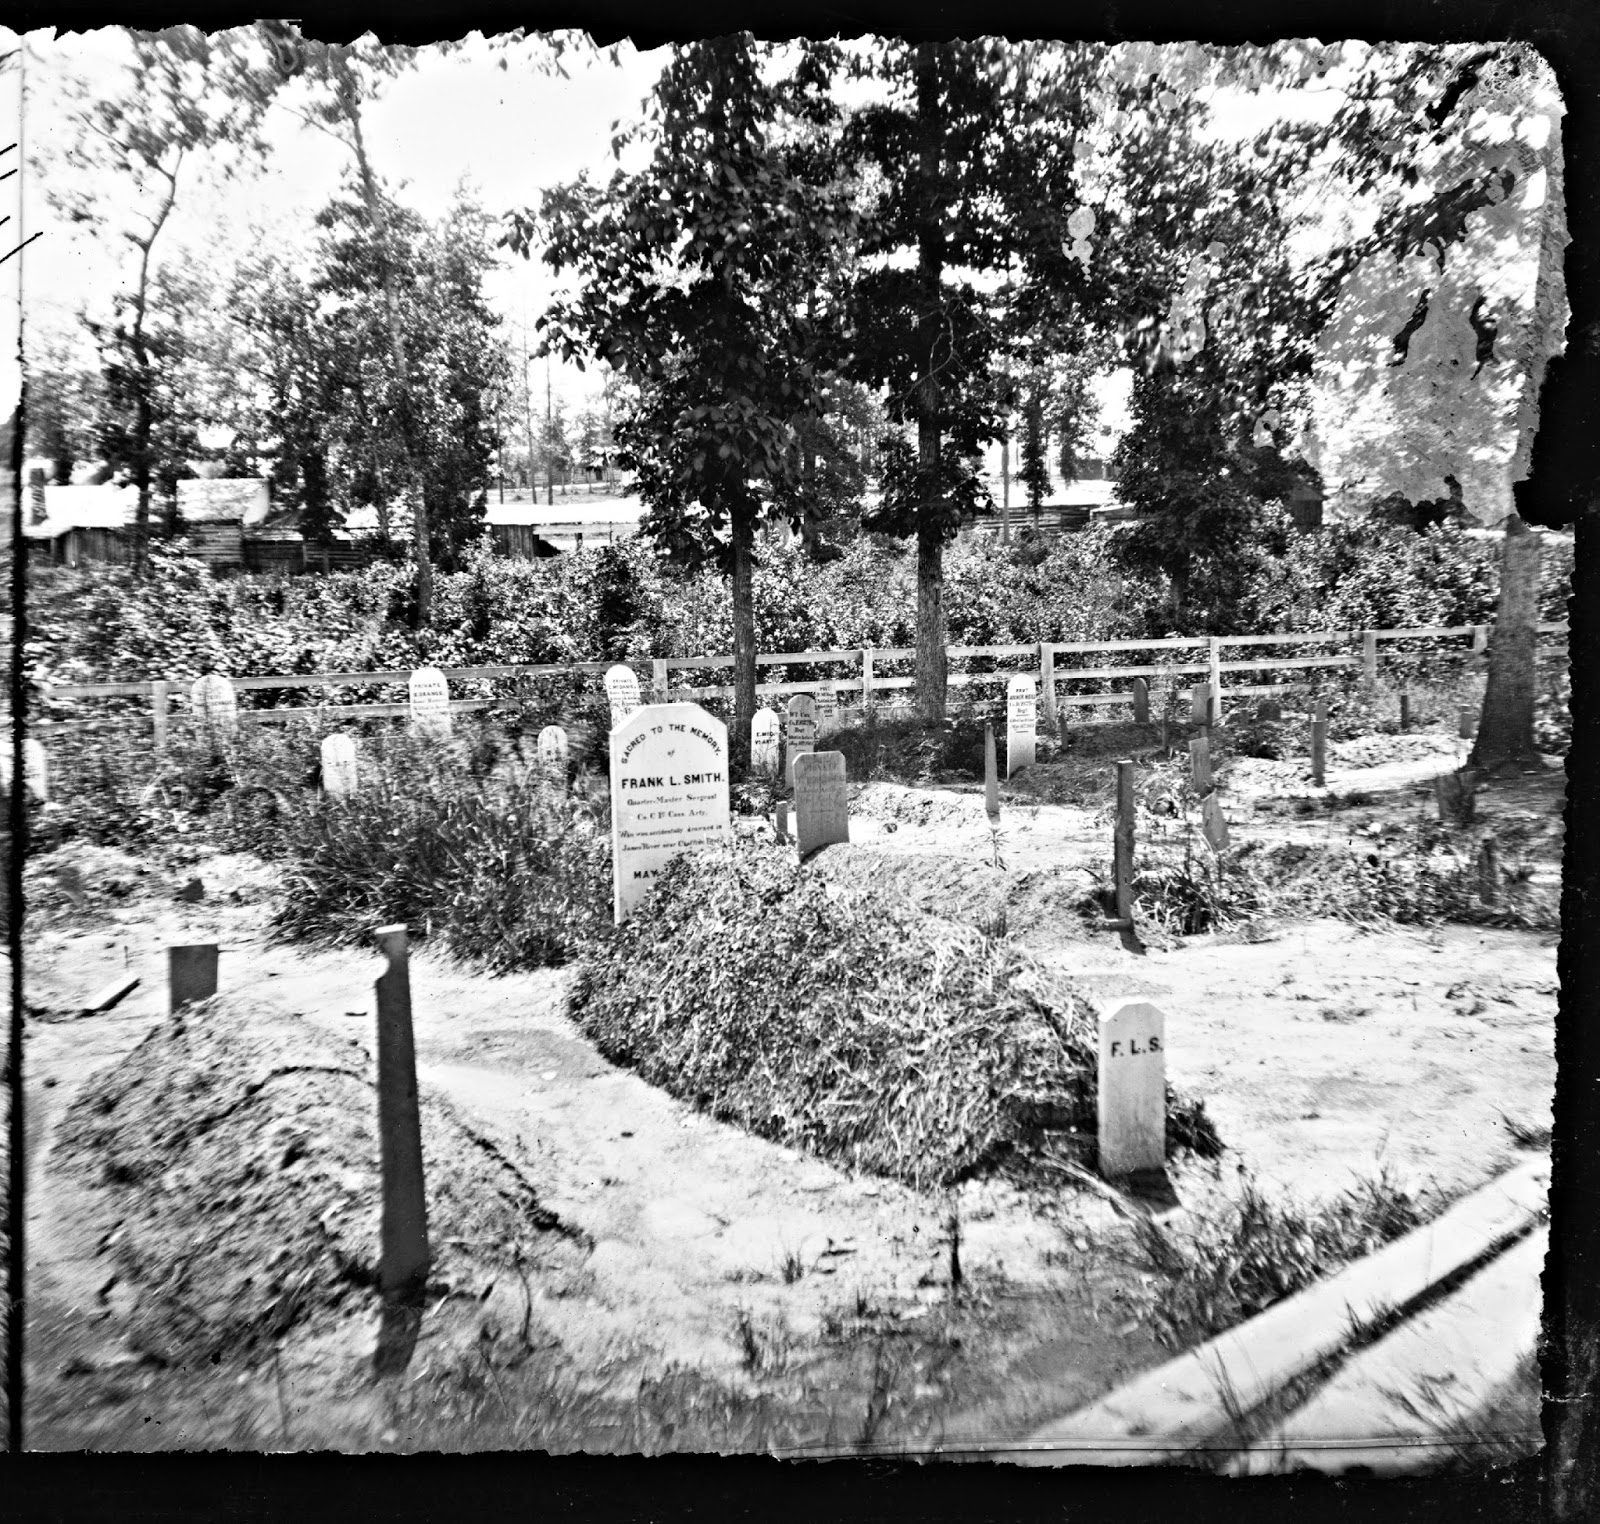 JOHN BANKS' CIVIL WAR BLOG: Virginia soldiers' cemetery ...